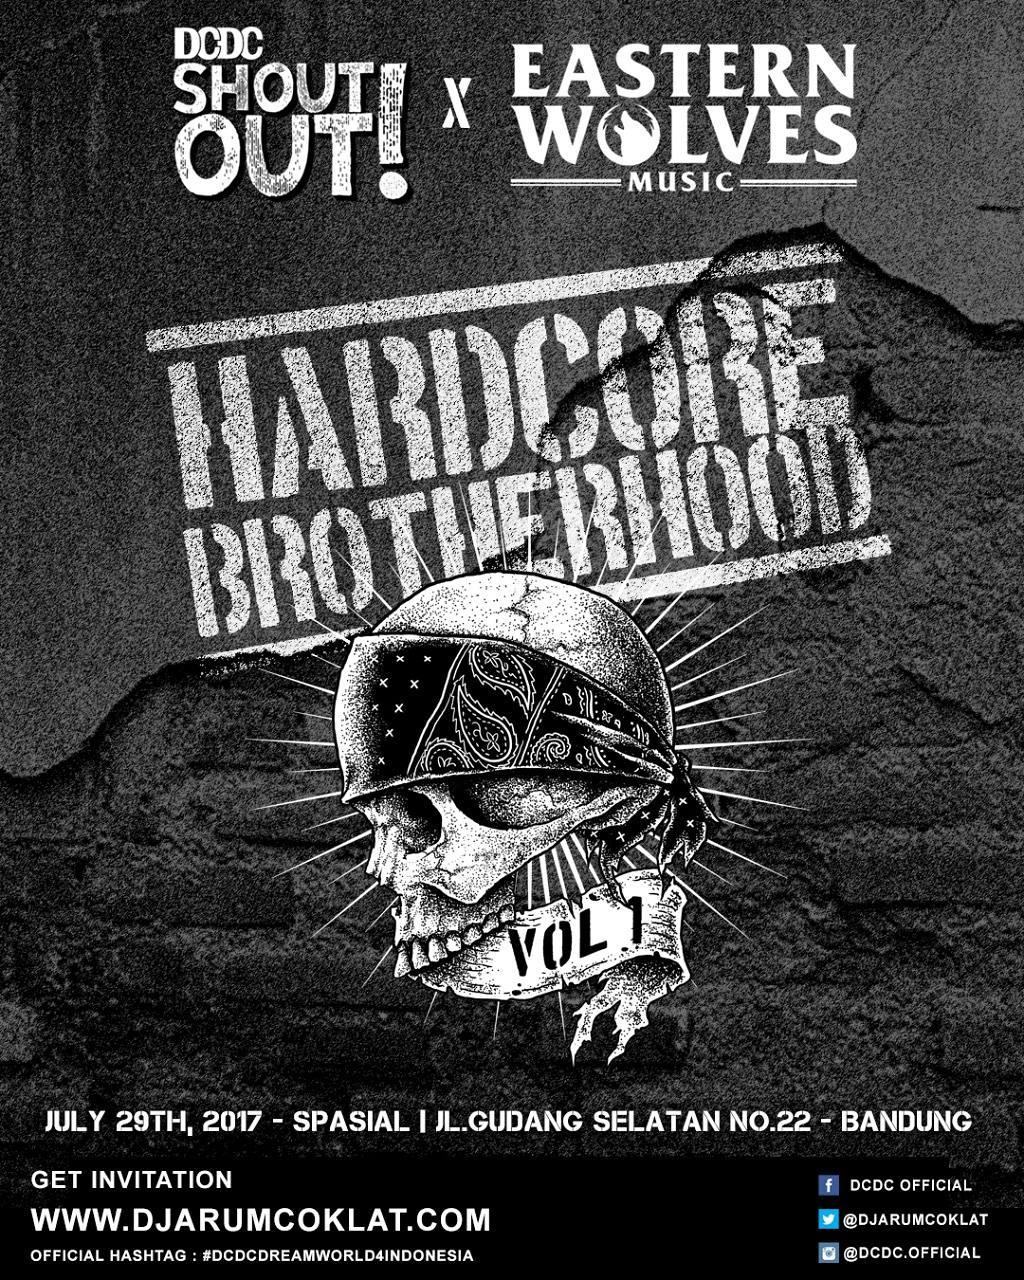 Hardcore Brotherhood Vol. 1